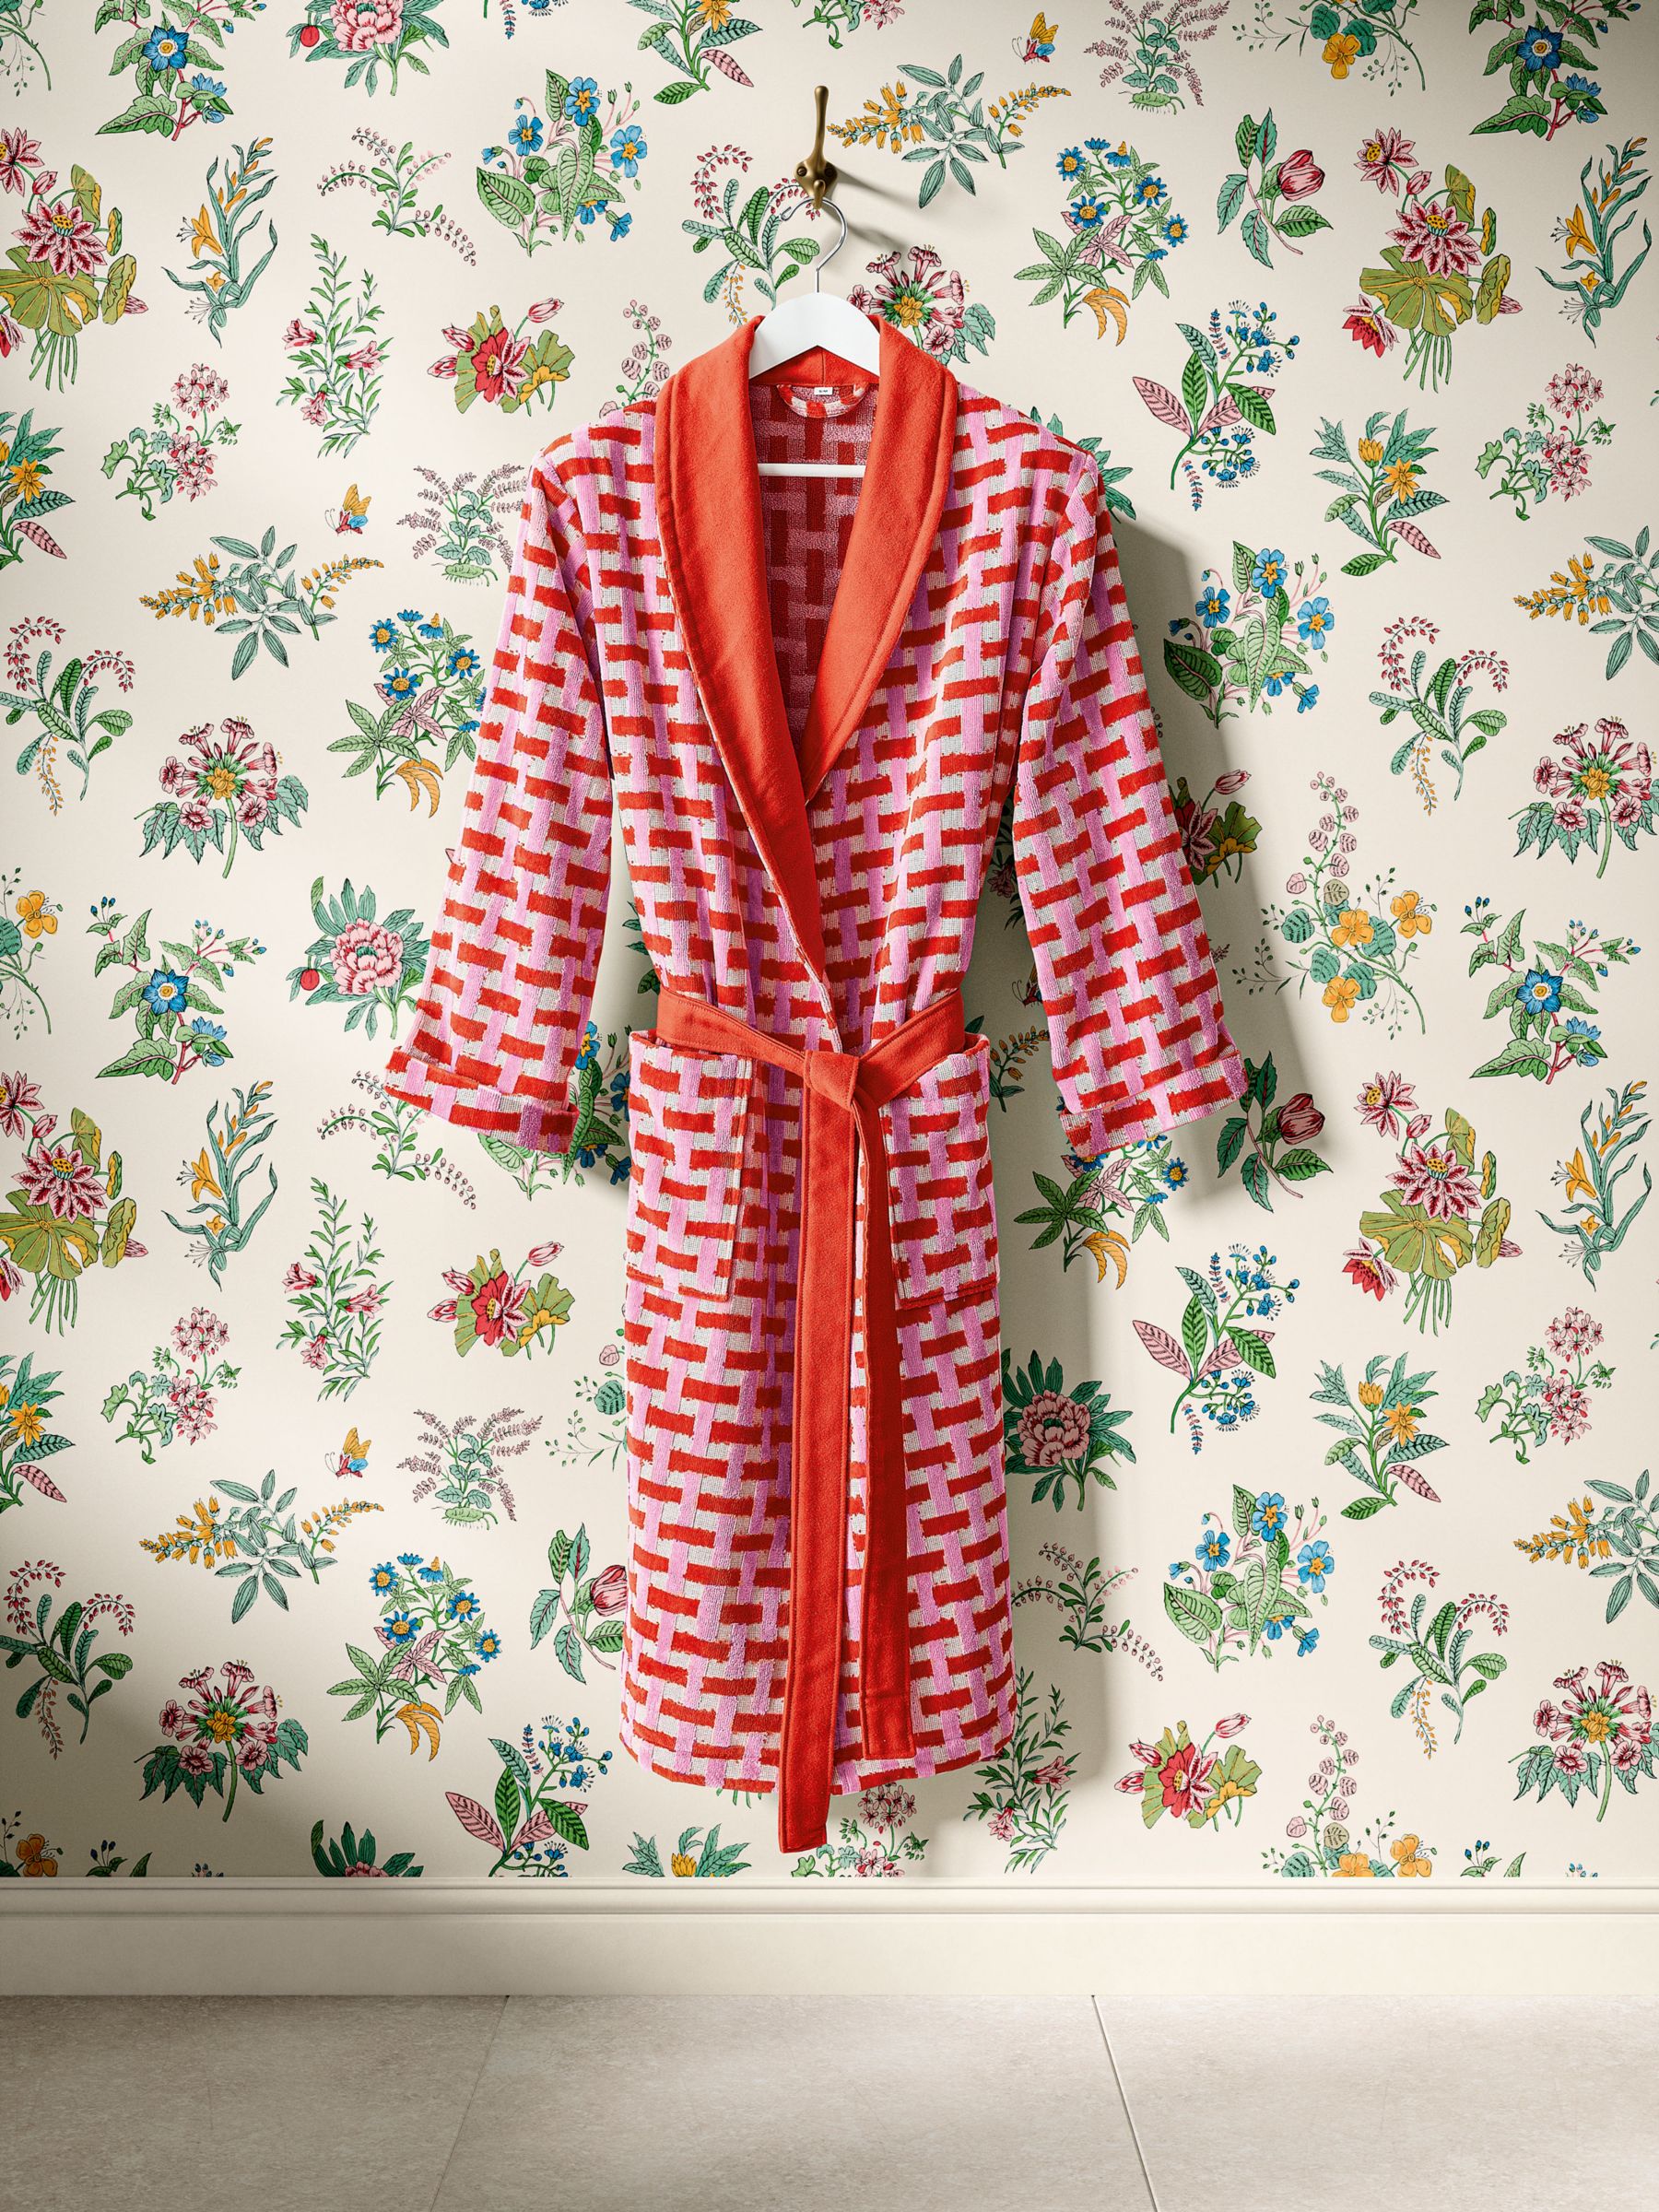 Harlequin x Sophie Robinson Sherbet Stripe Bath Robe, £95.00